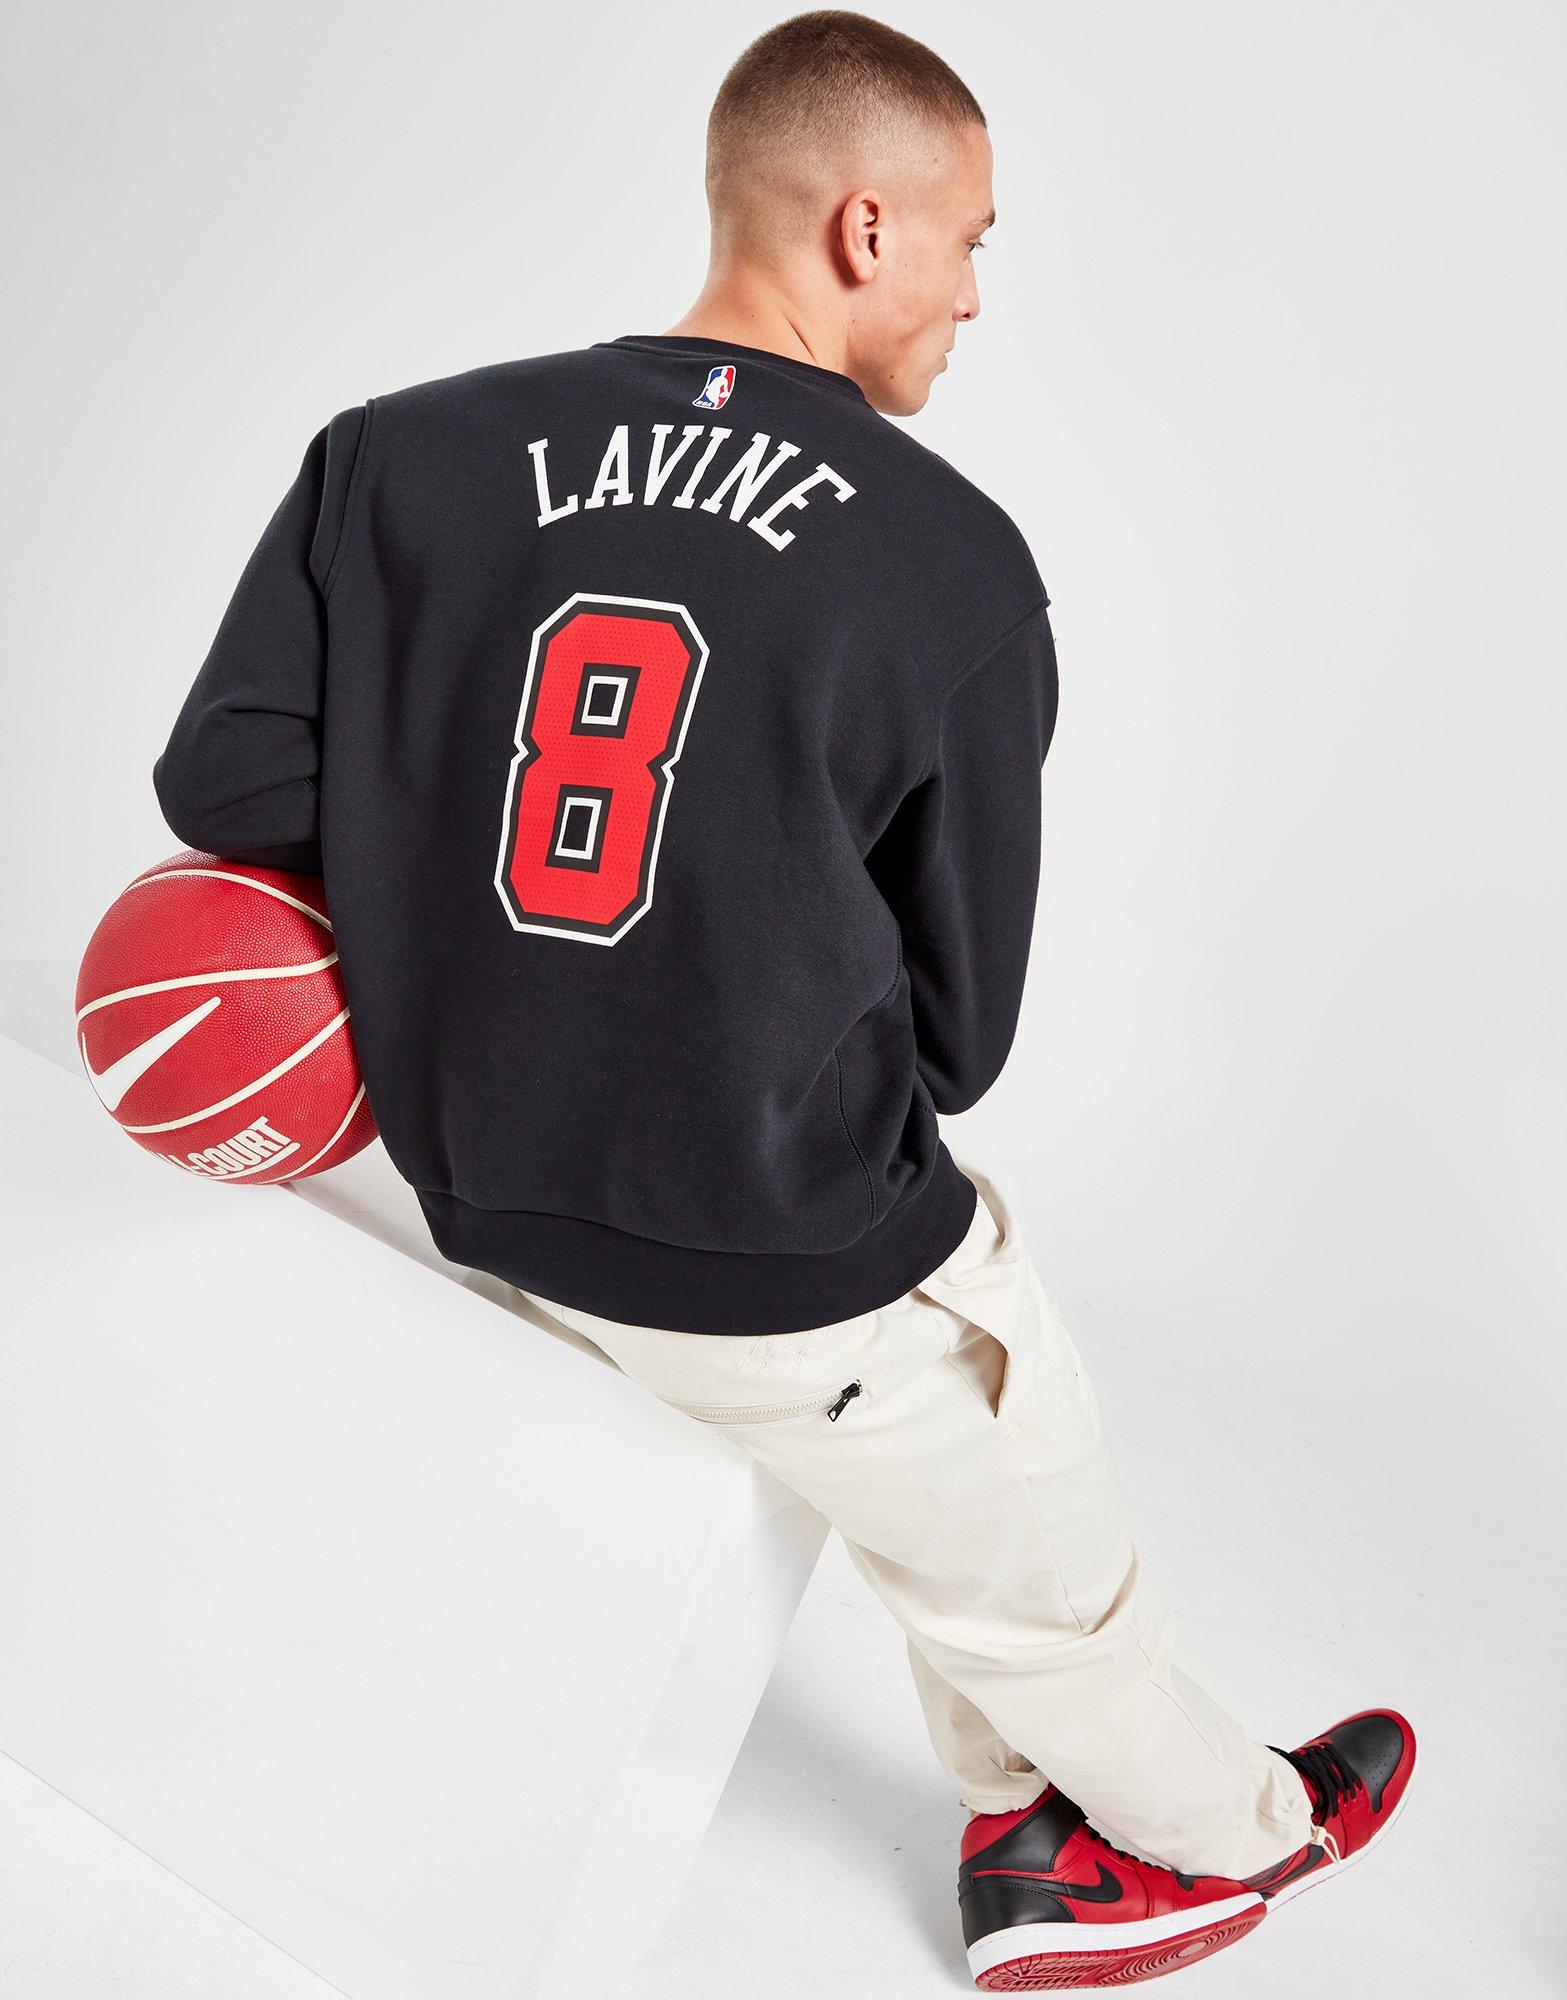 Chicago Bulls Track Jacket Sweatshirt Tracksuit Basketball Vintage